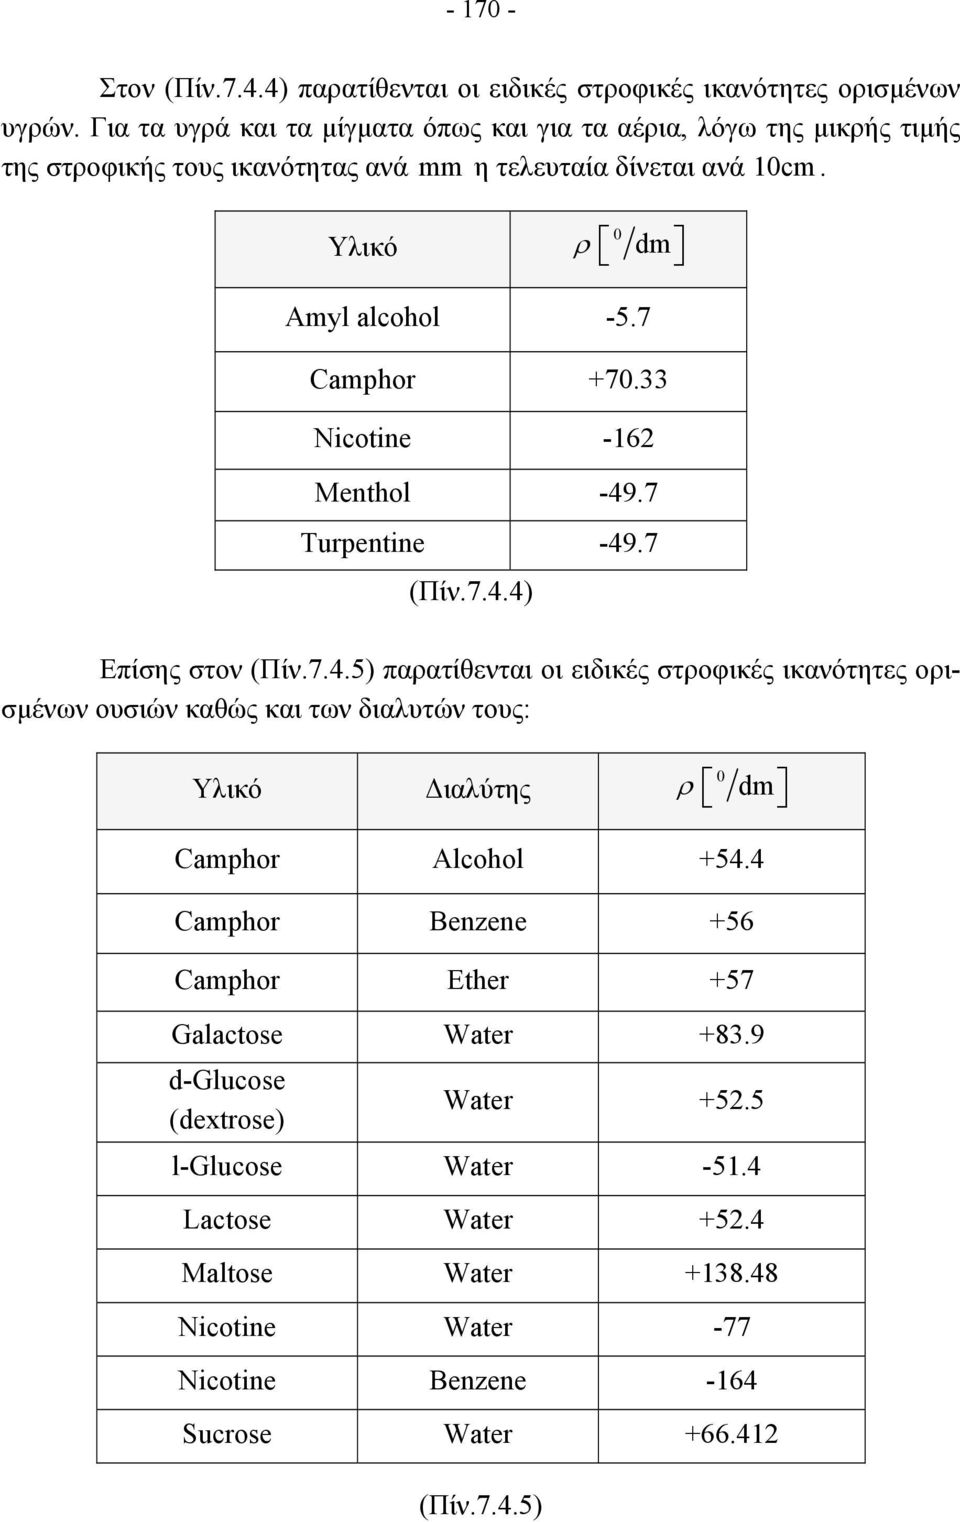 7 Camphor +70.33 Nicotine -16 Menthol -49.7 Turpentine -49.7 (Πίν.7.4.4) Επίσης στον (Πίν.7.4.5) παρατίθενται οι ειδικές στροφικές ικανότητες ορισµένων ουσιών καθώς και των διαλυτών τους: Υλικό ιαλύτης ρ 0 dm Camphor Alcohol +54.